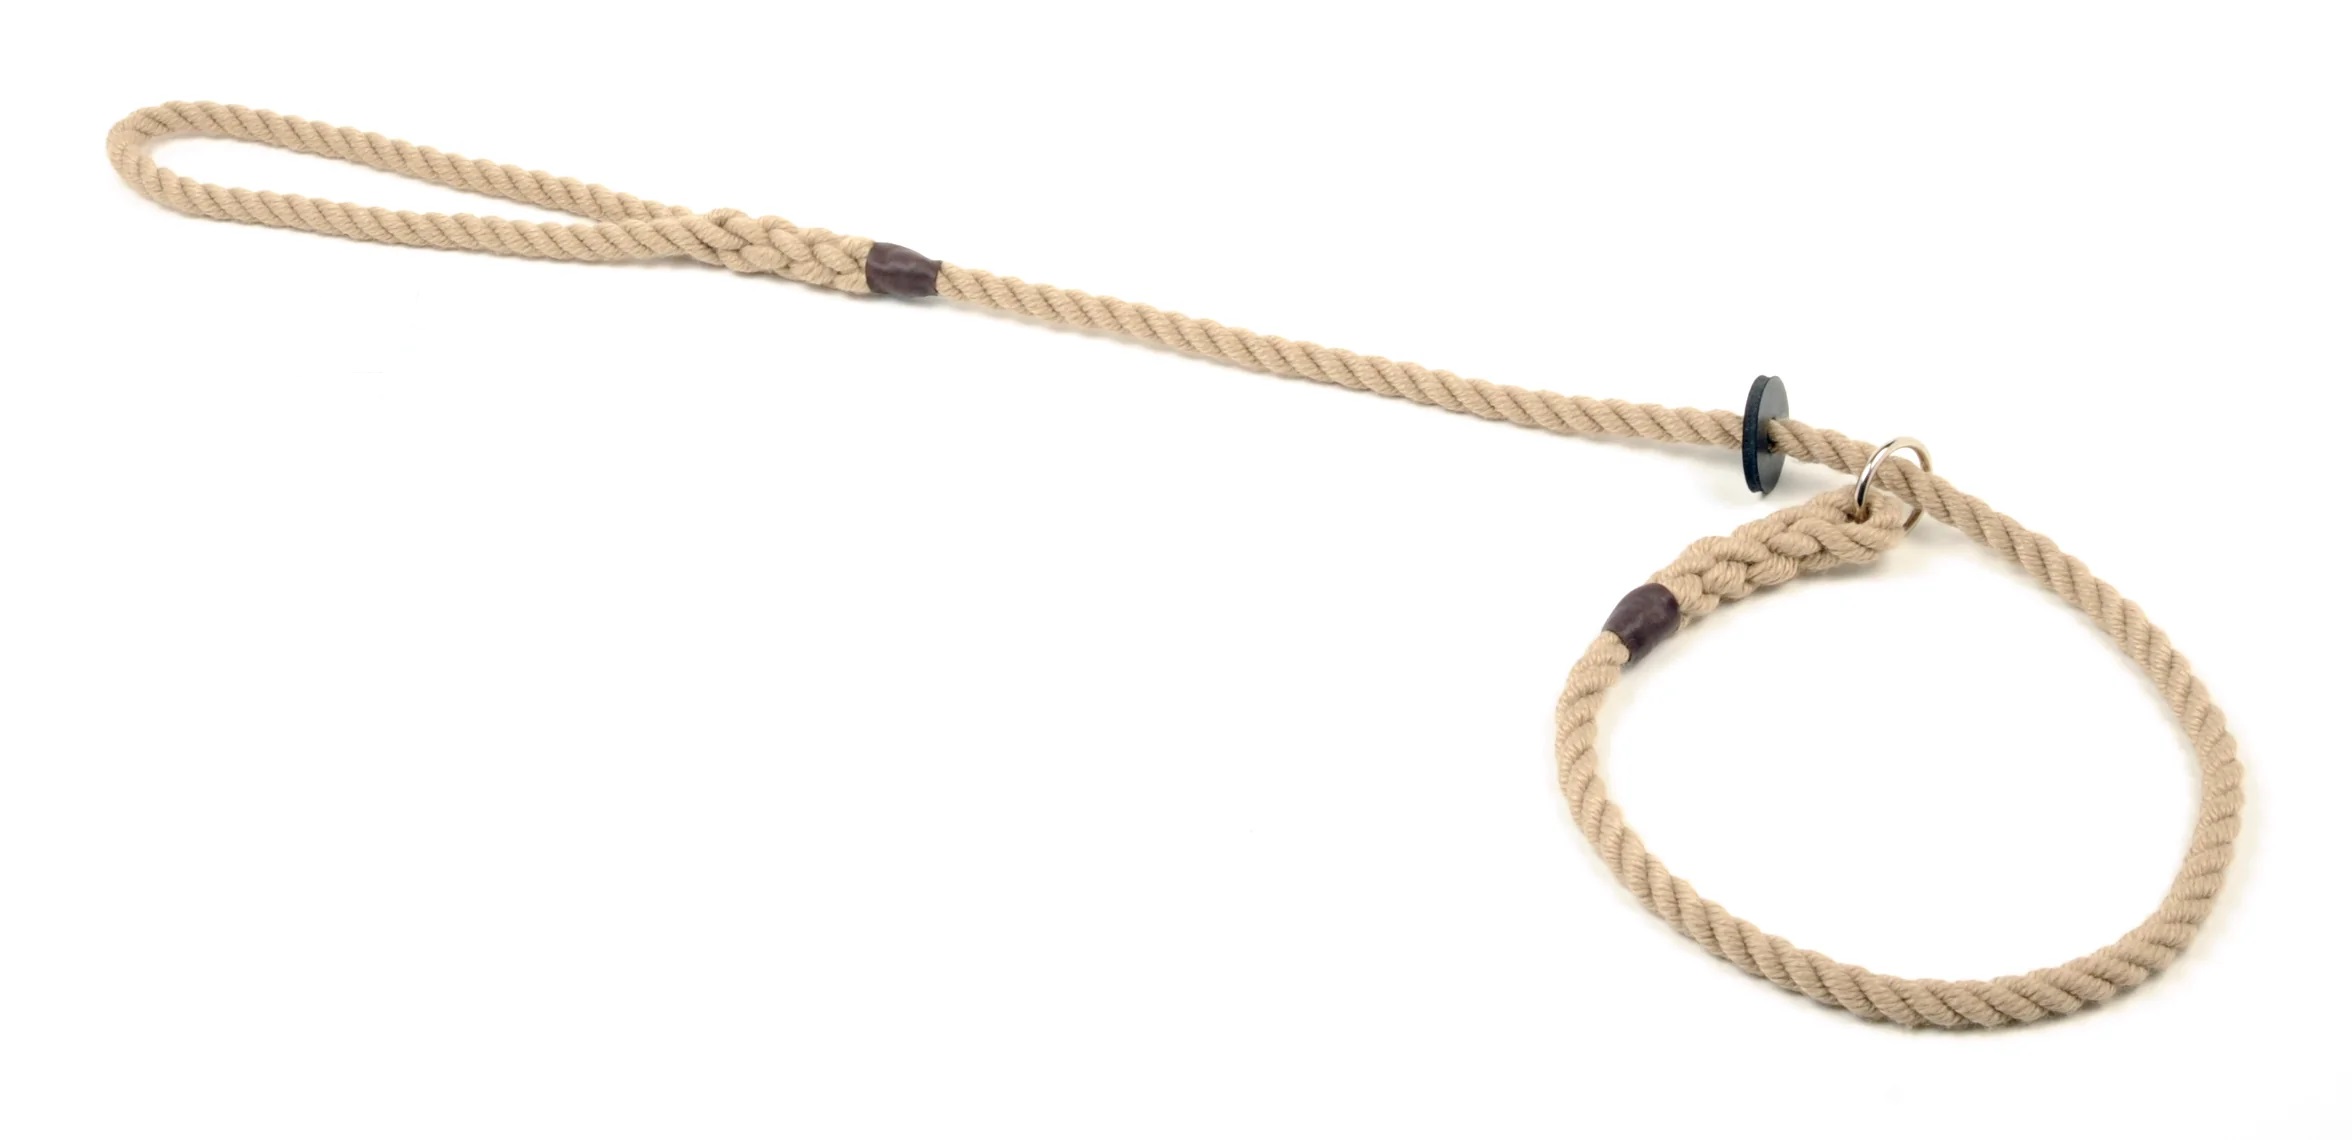 8mm Diameter Rope Slip lead with rubber stopper, 1.5m Length